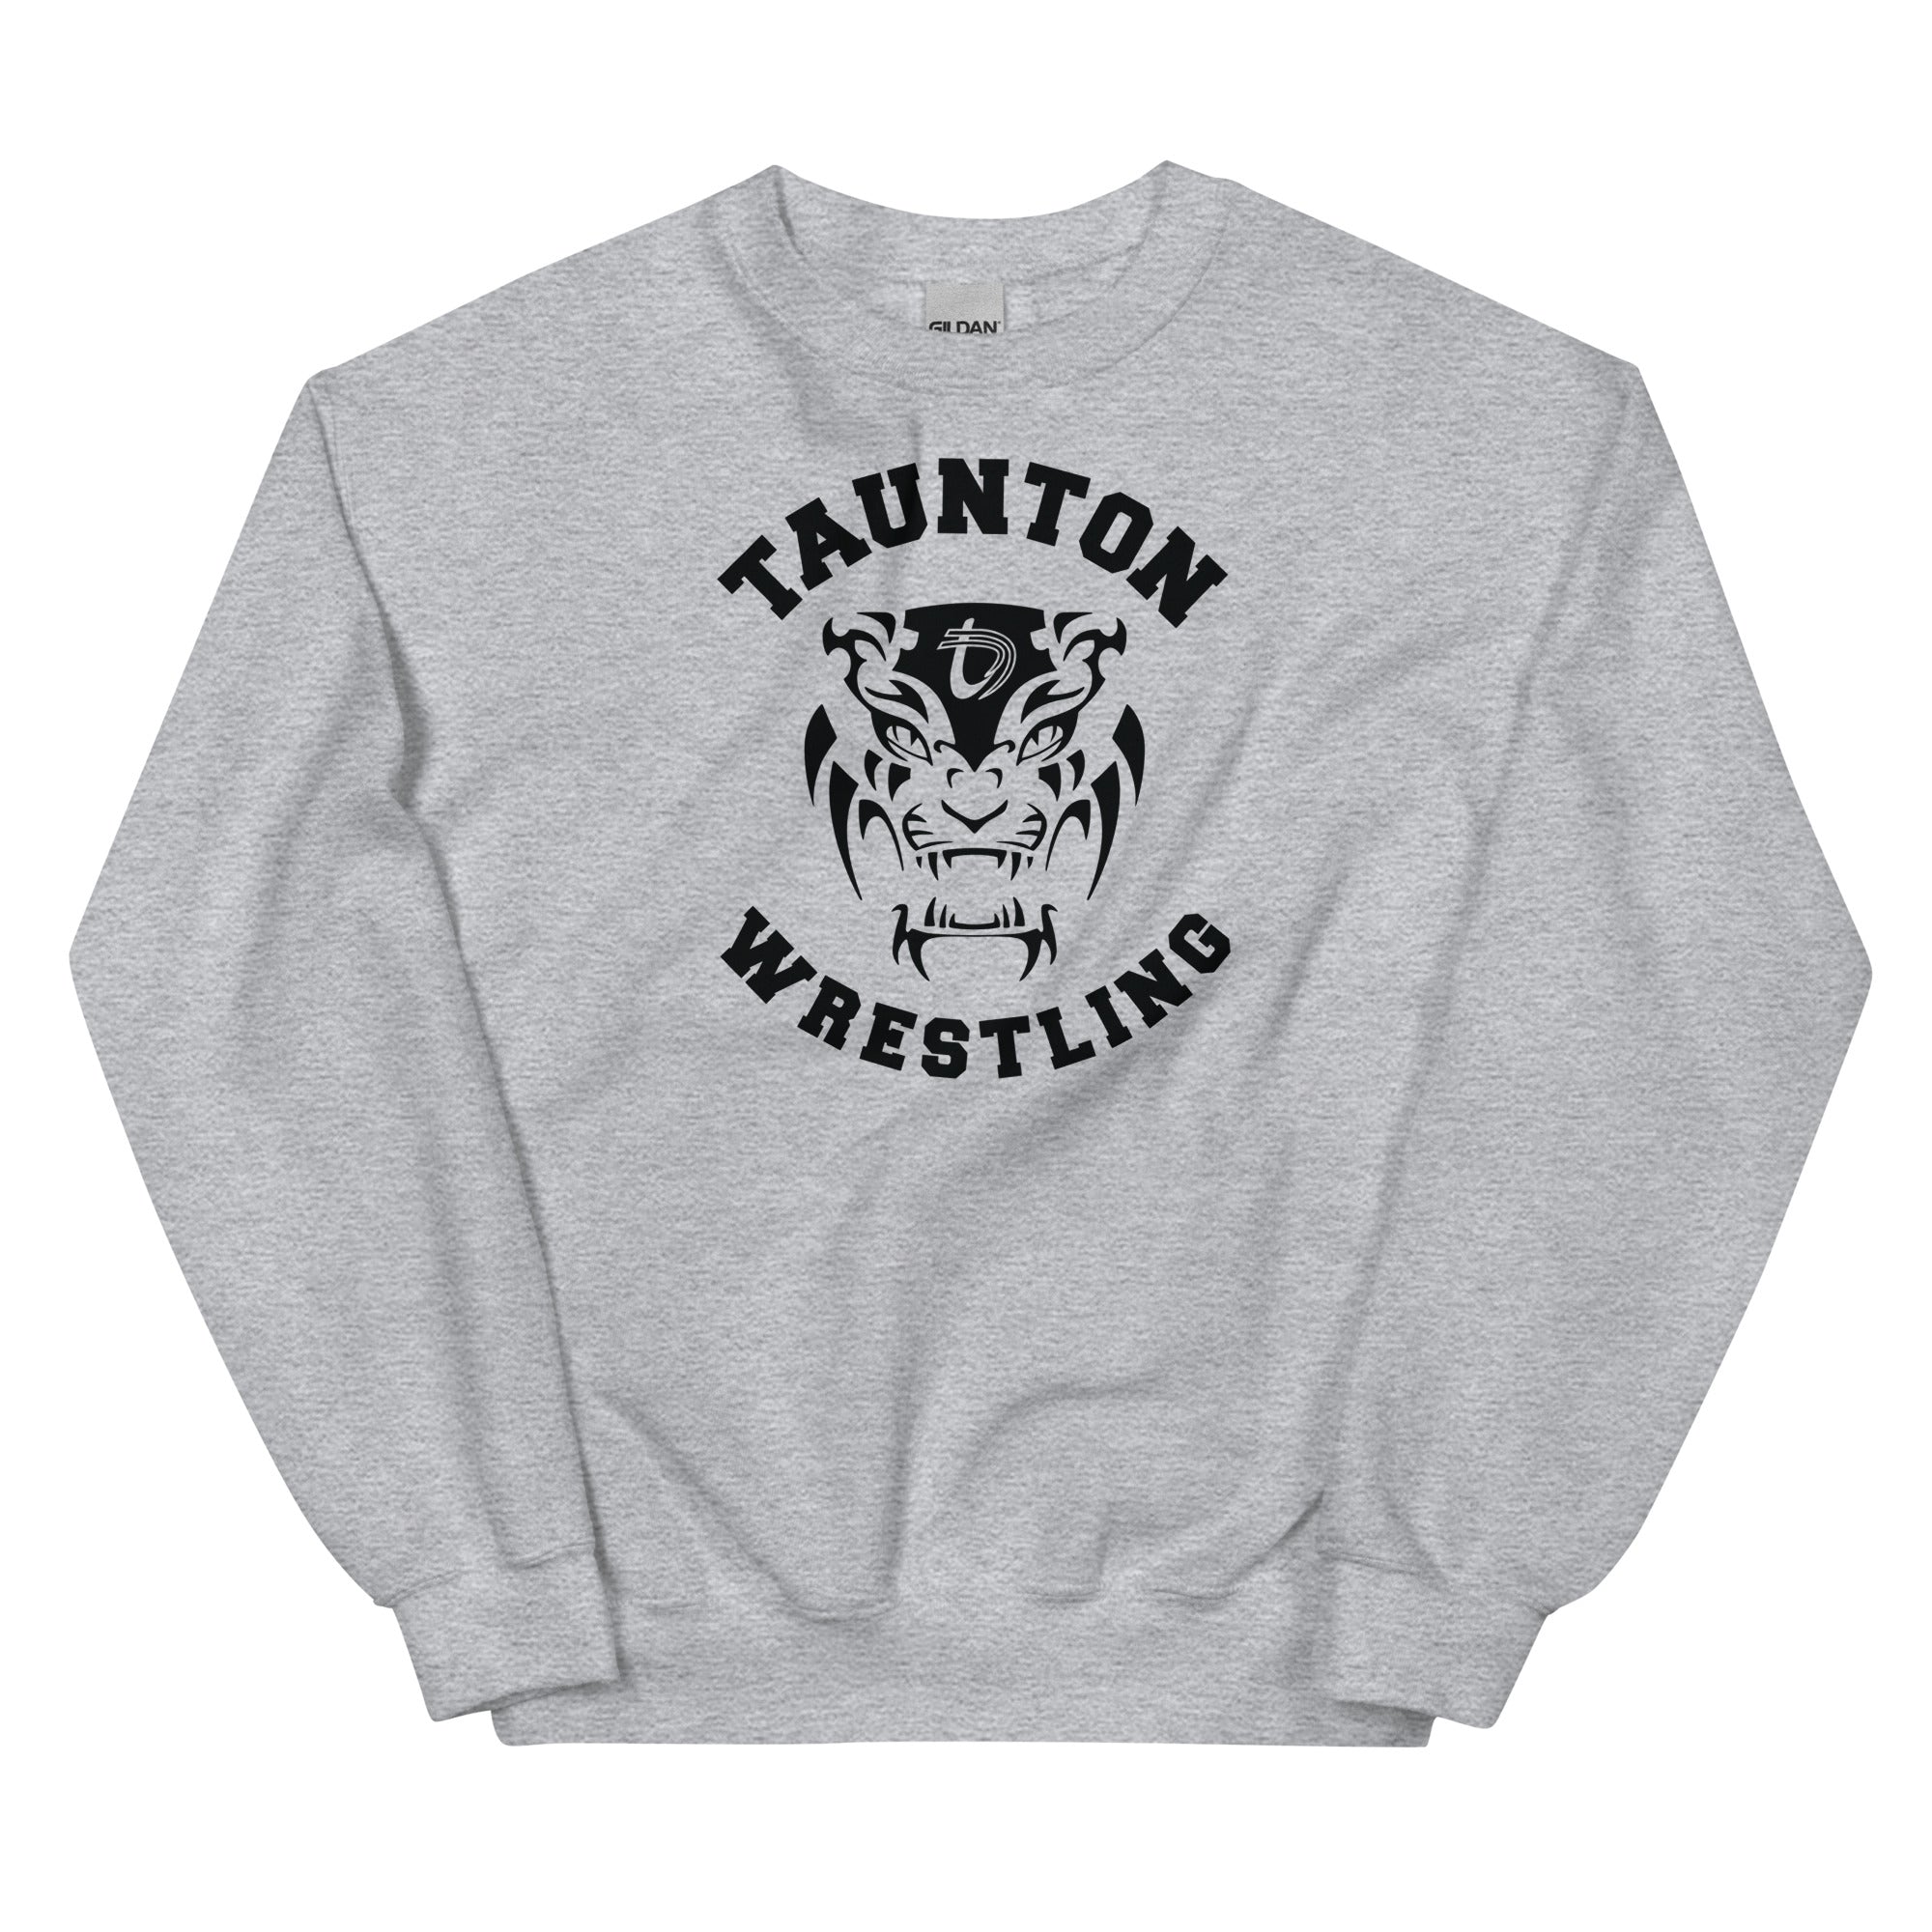 Taunton Wrestling  Unisex Crew Neck Sweatshirt